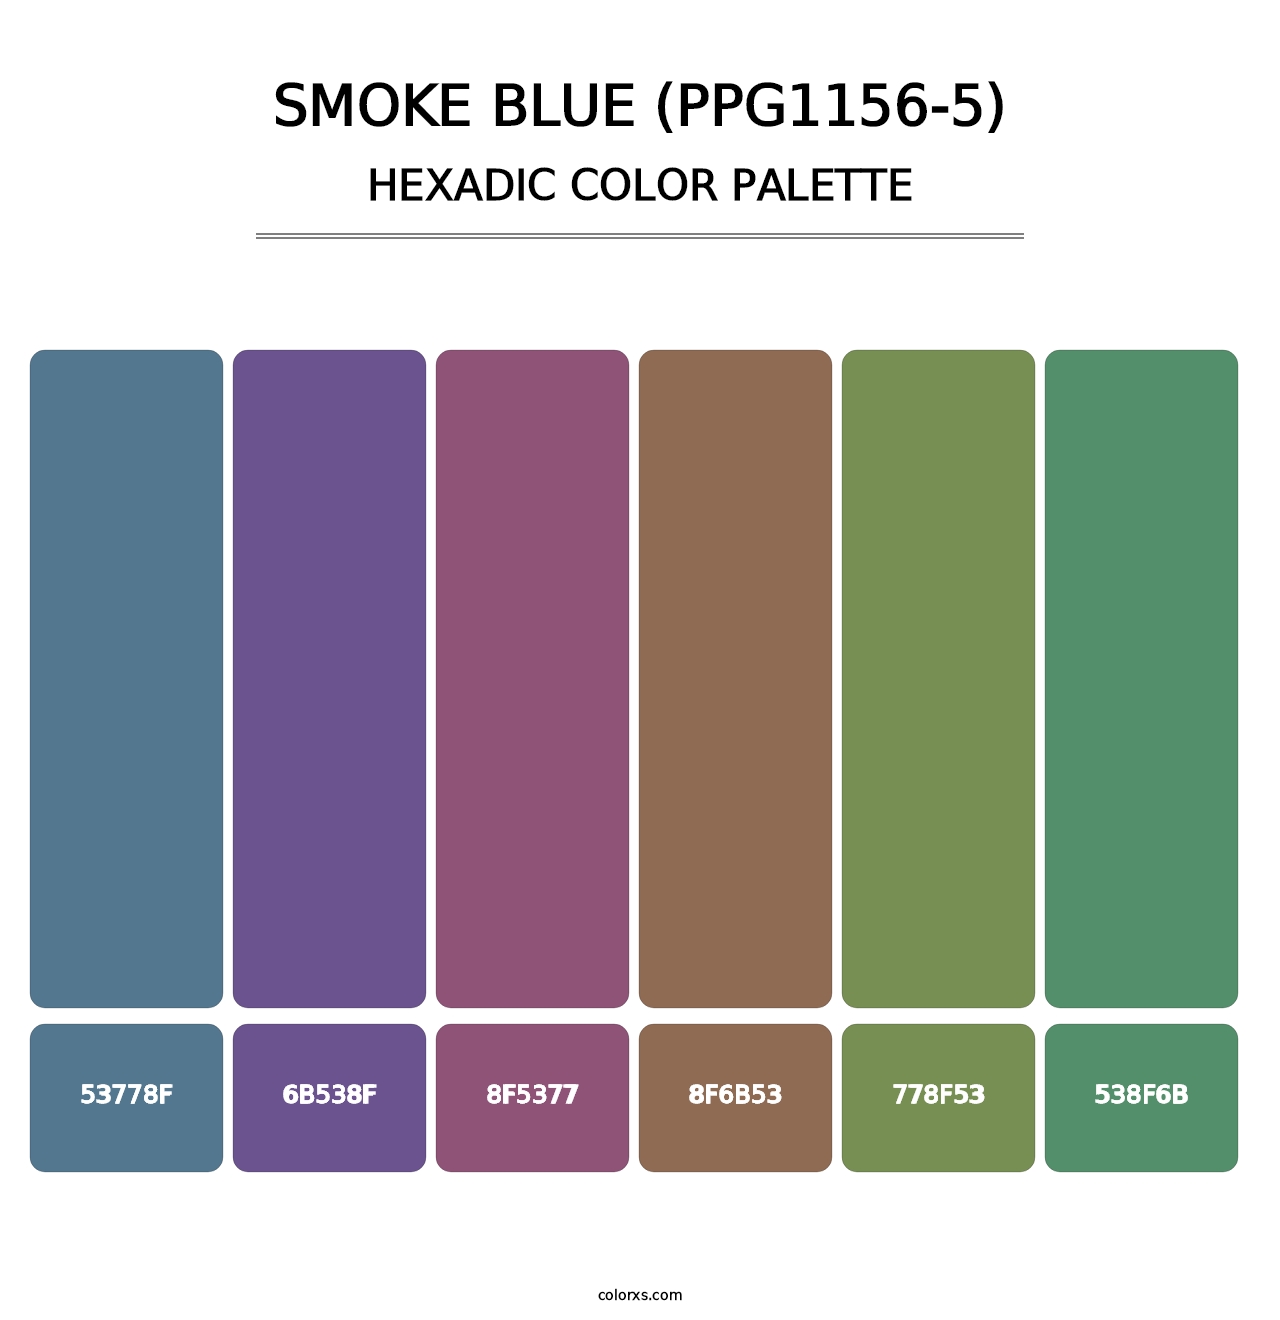 Smoke Blue (PPG1156-5) - Hexadic Color Palette